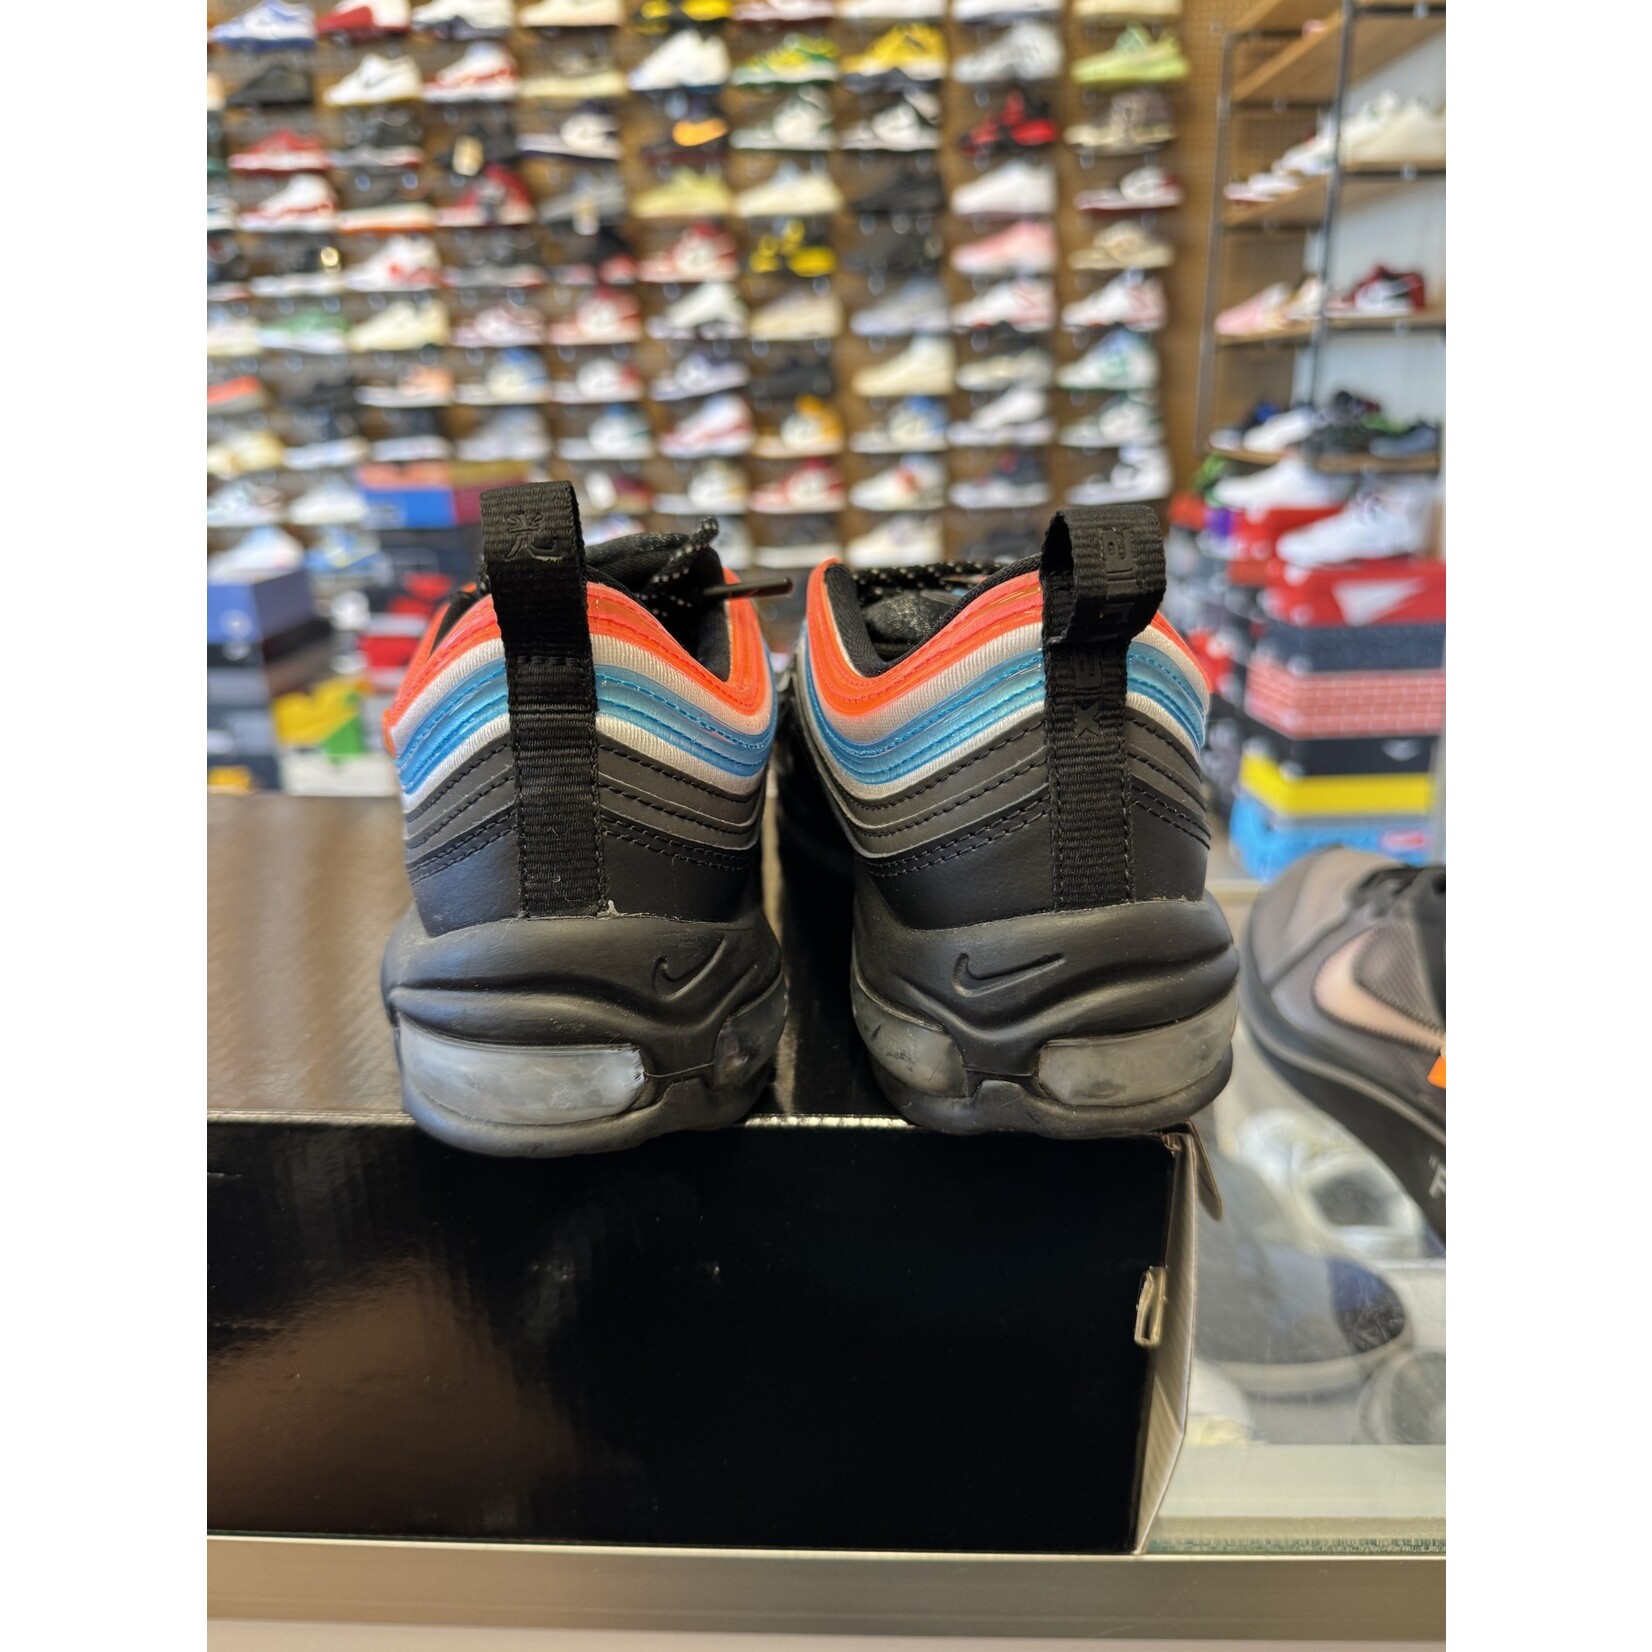 Nike Nike Air Max 97 Neon Seoul Size 9, PREOWNED